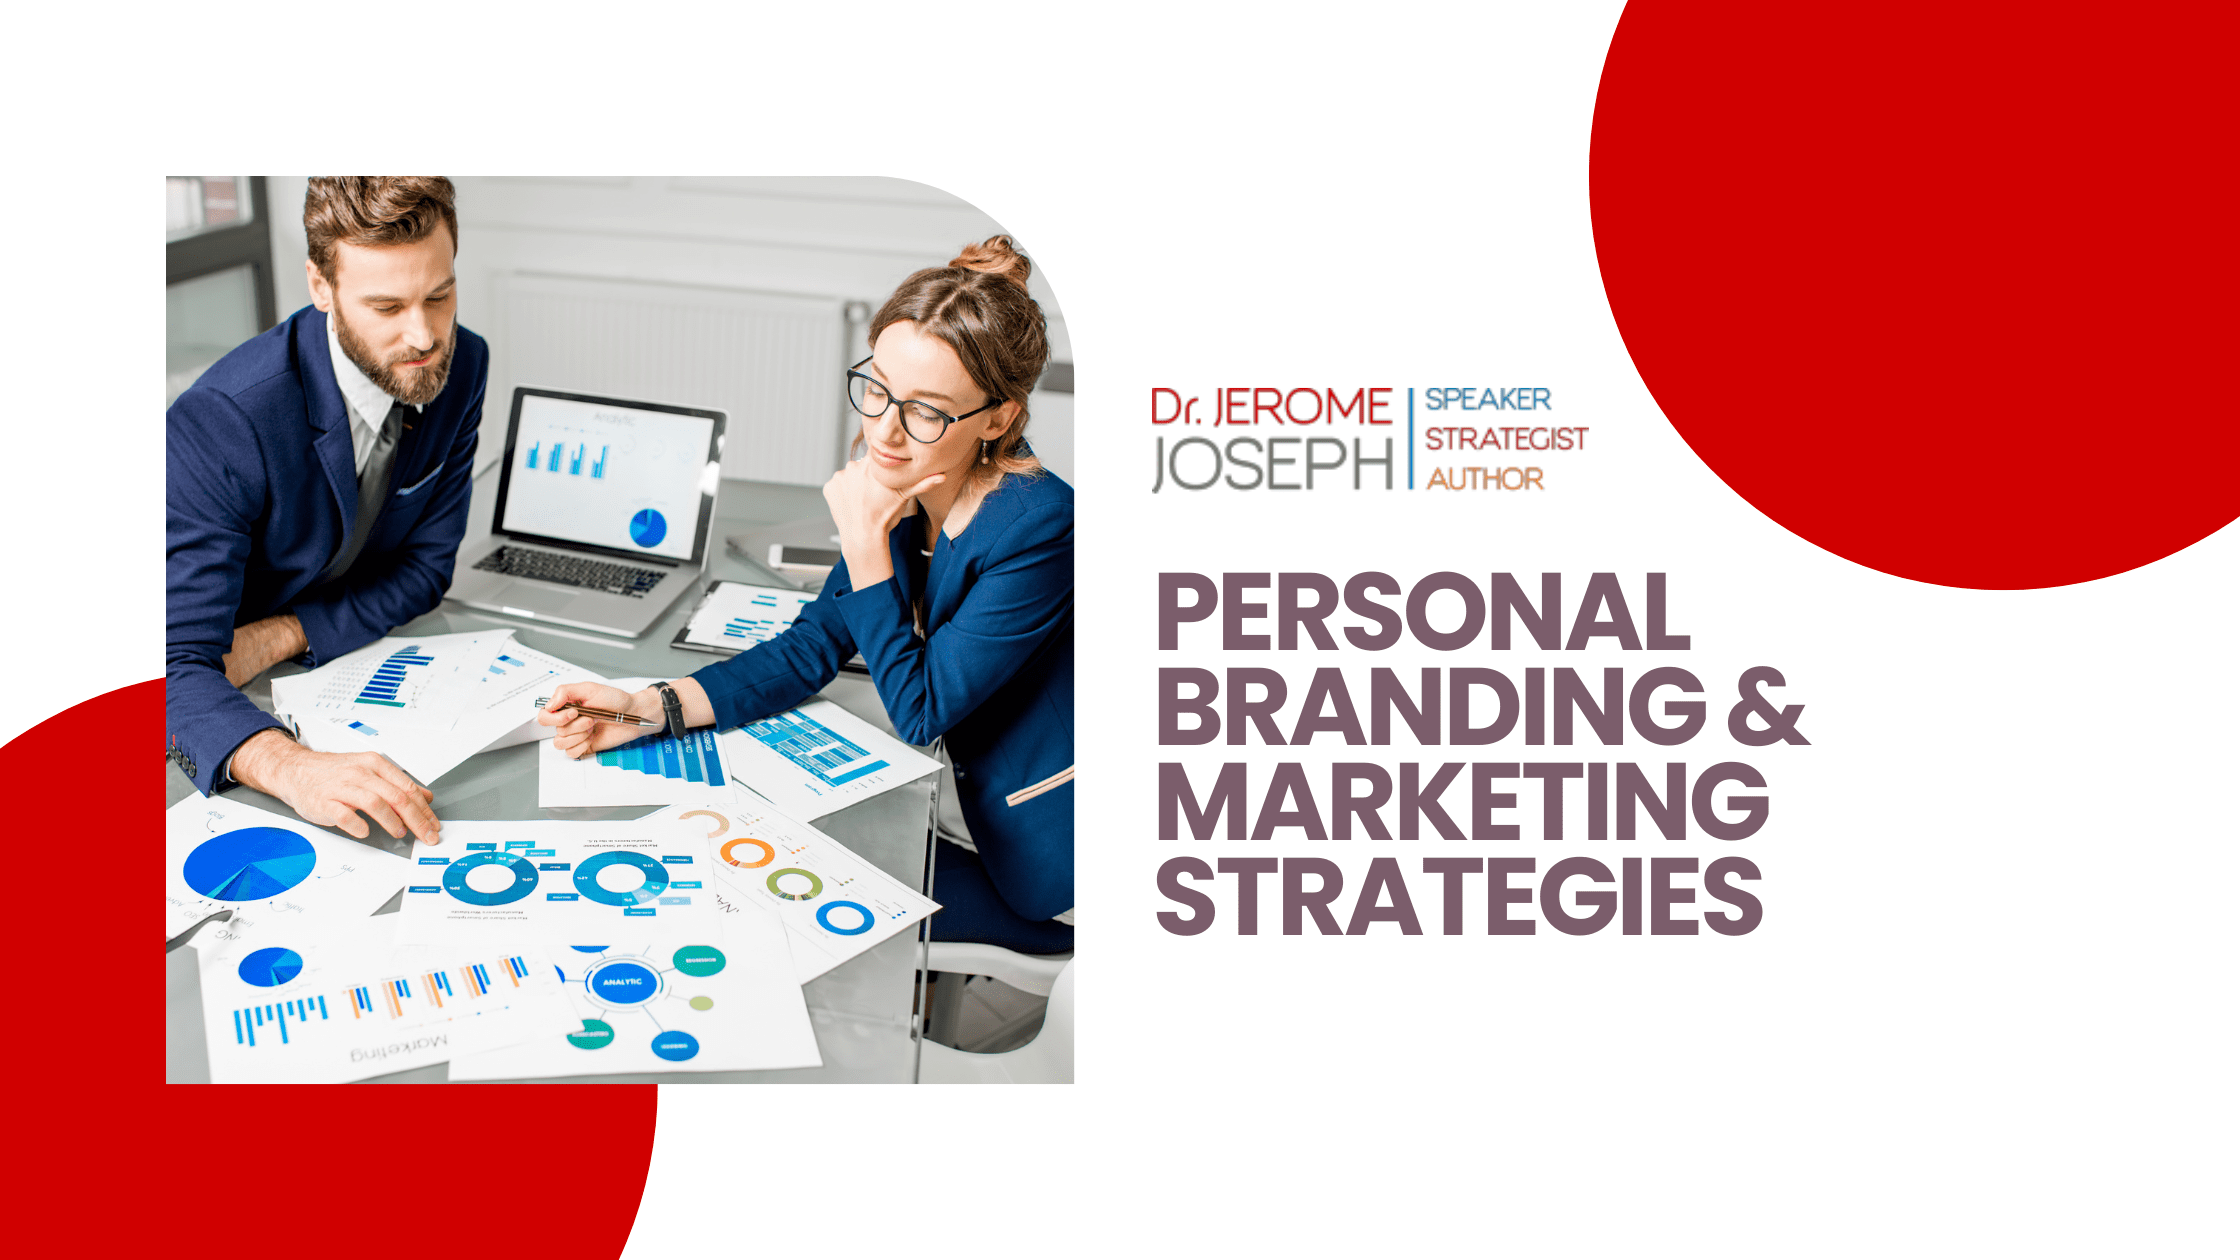 Personal Branding & Marketing Strategies for Personal Development